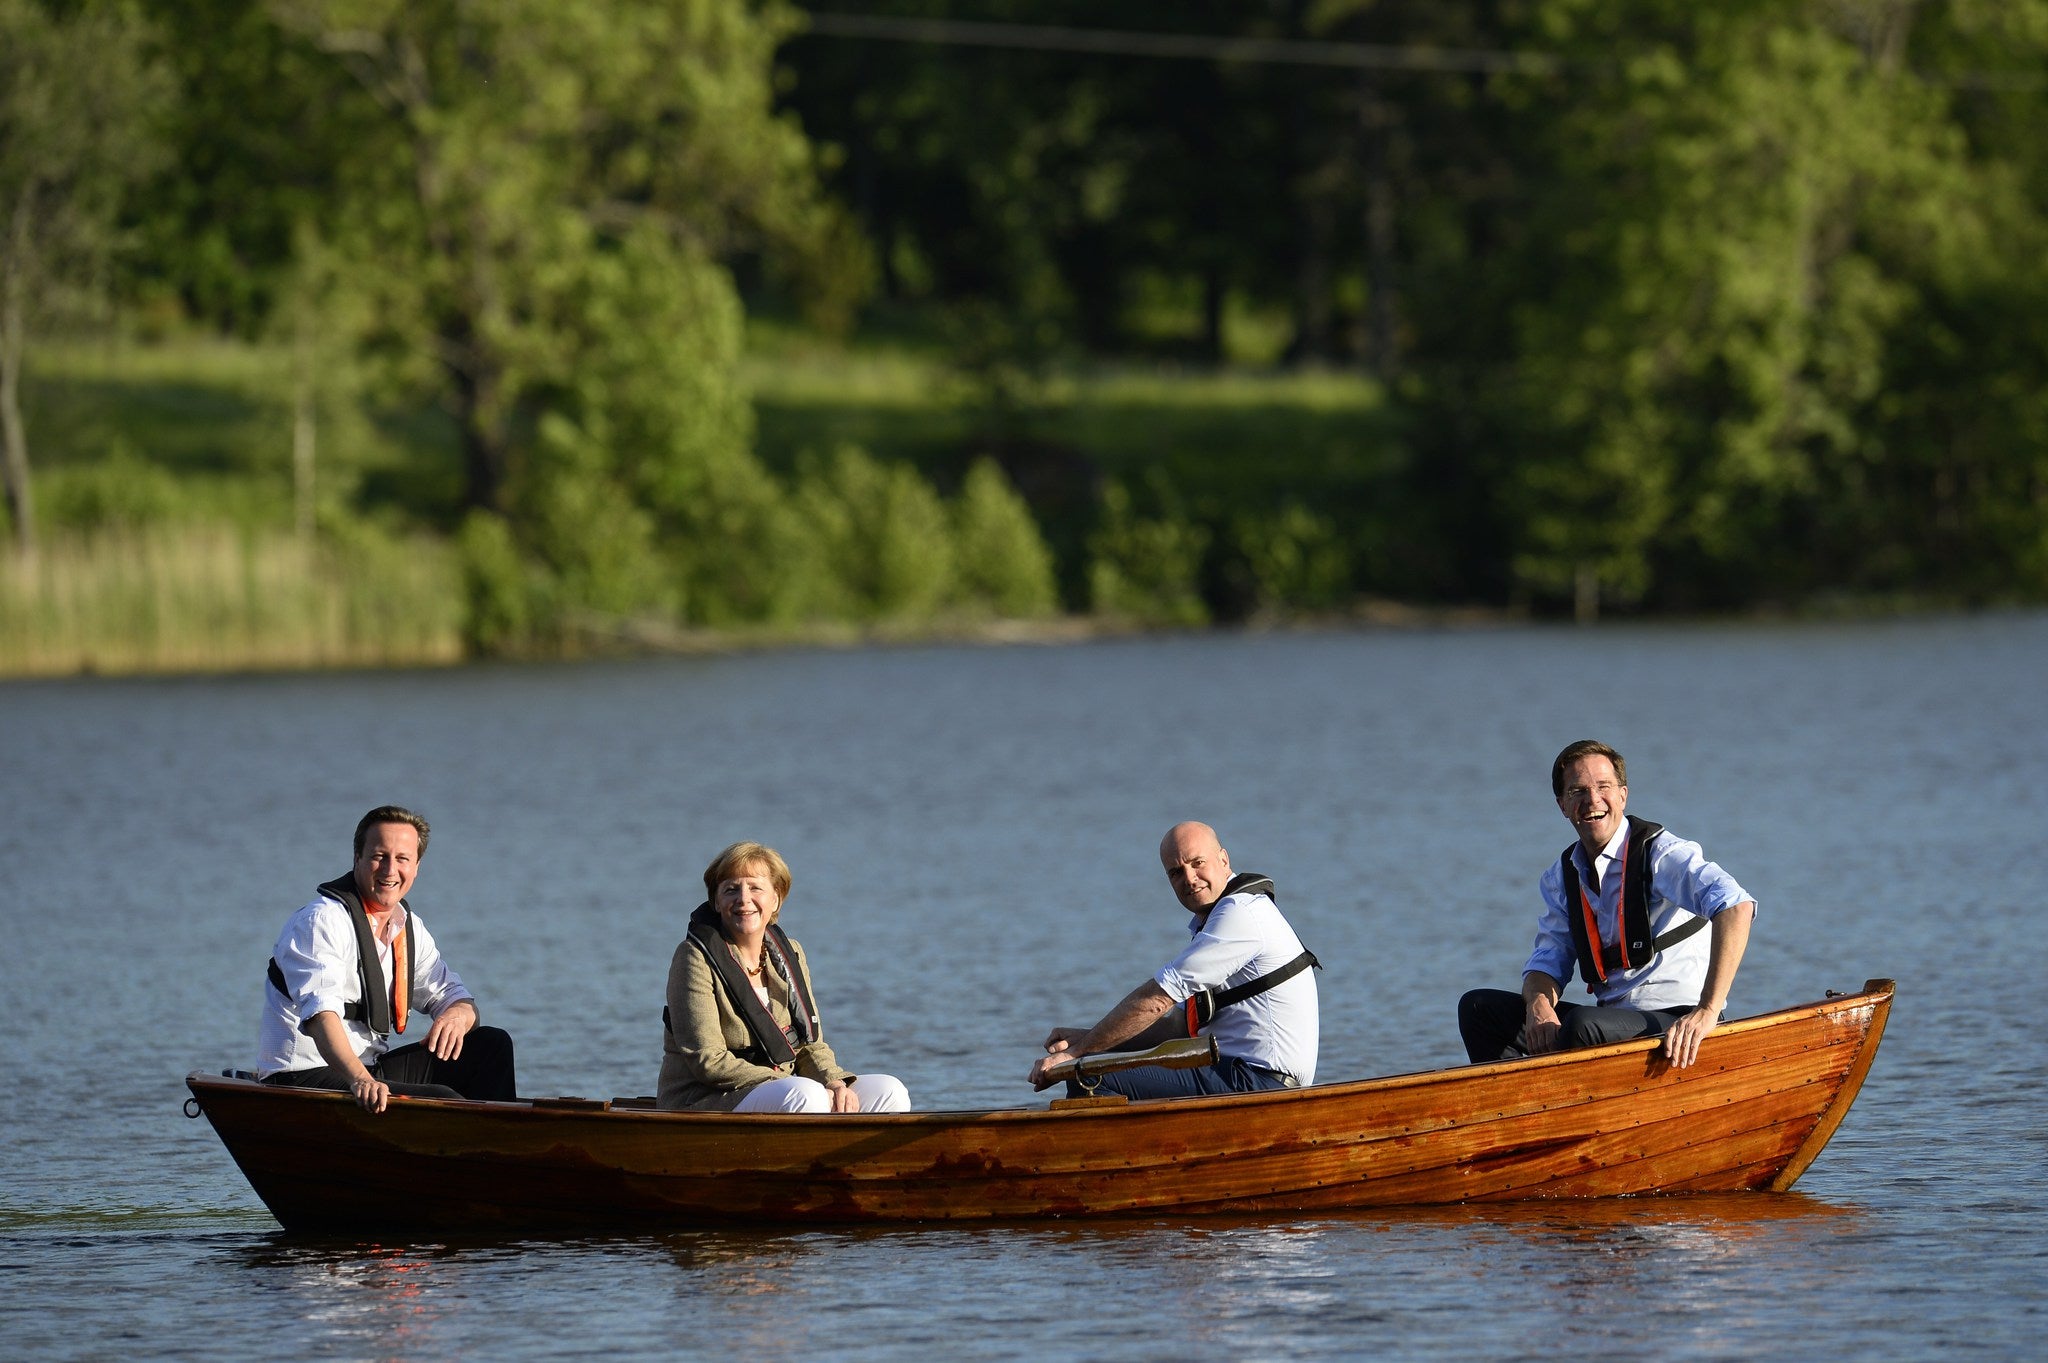 British Prime Minister David Cameron, German Chancellor Angela Merkel, Swedish Prime minister Fredrik Reinfeldt and Dutch Prime Minister Mark Rutte in a boat